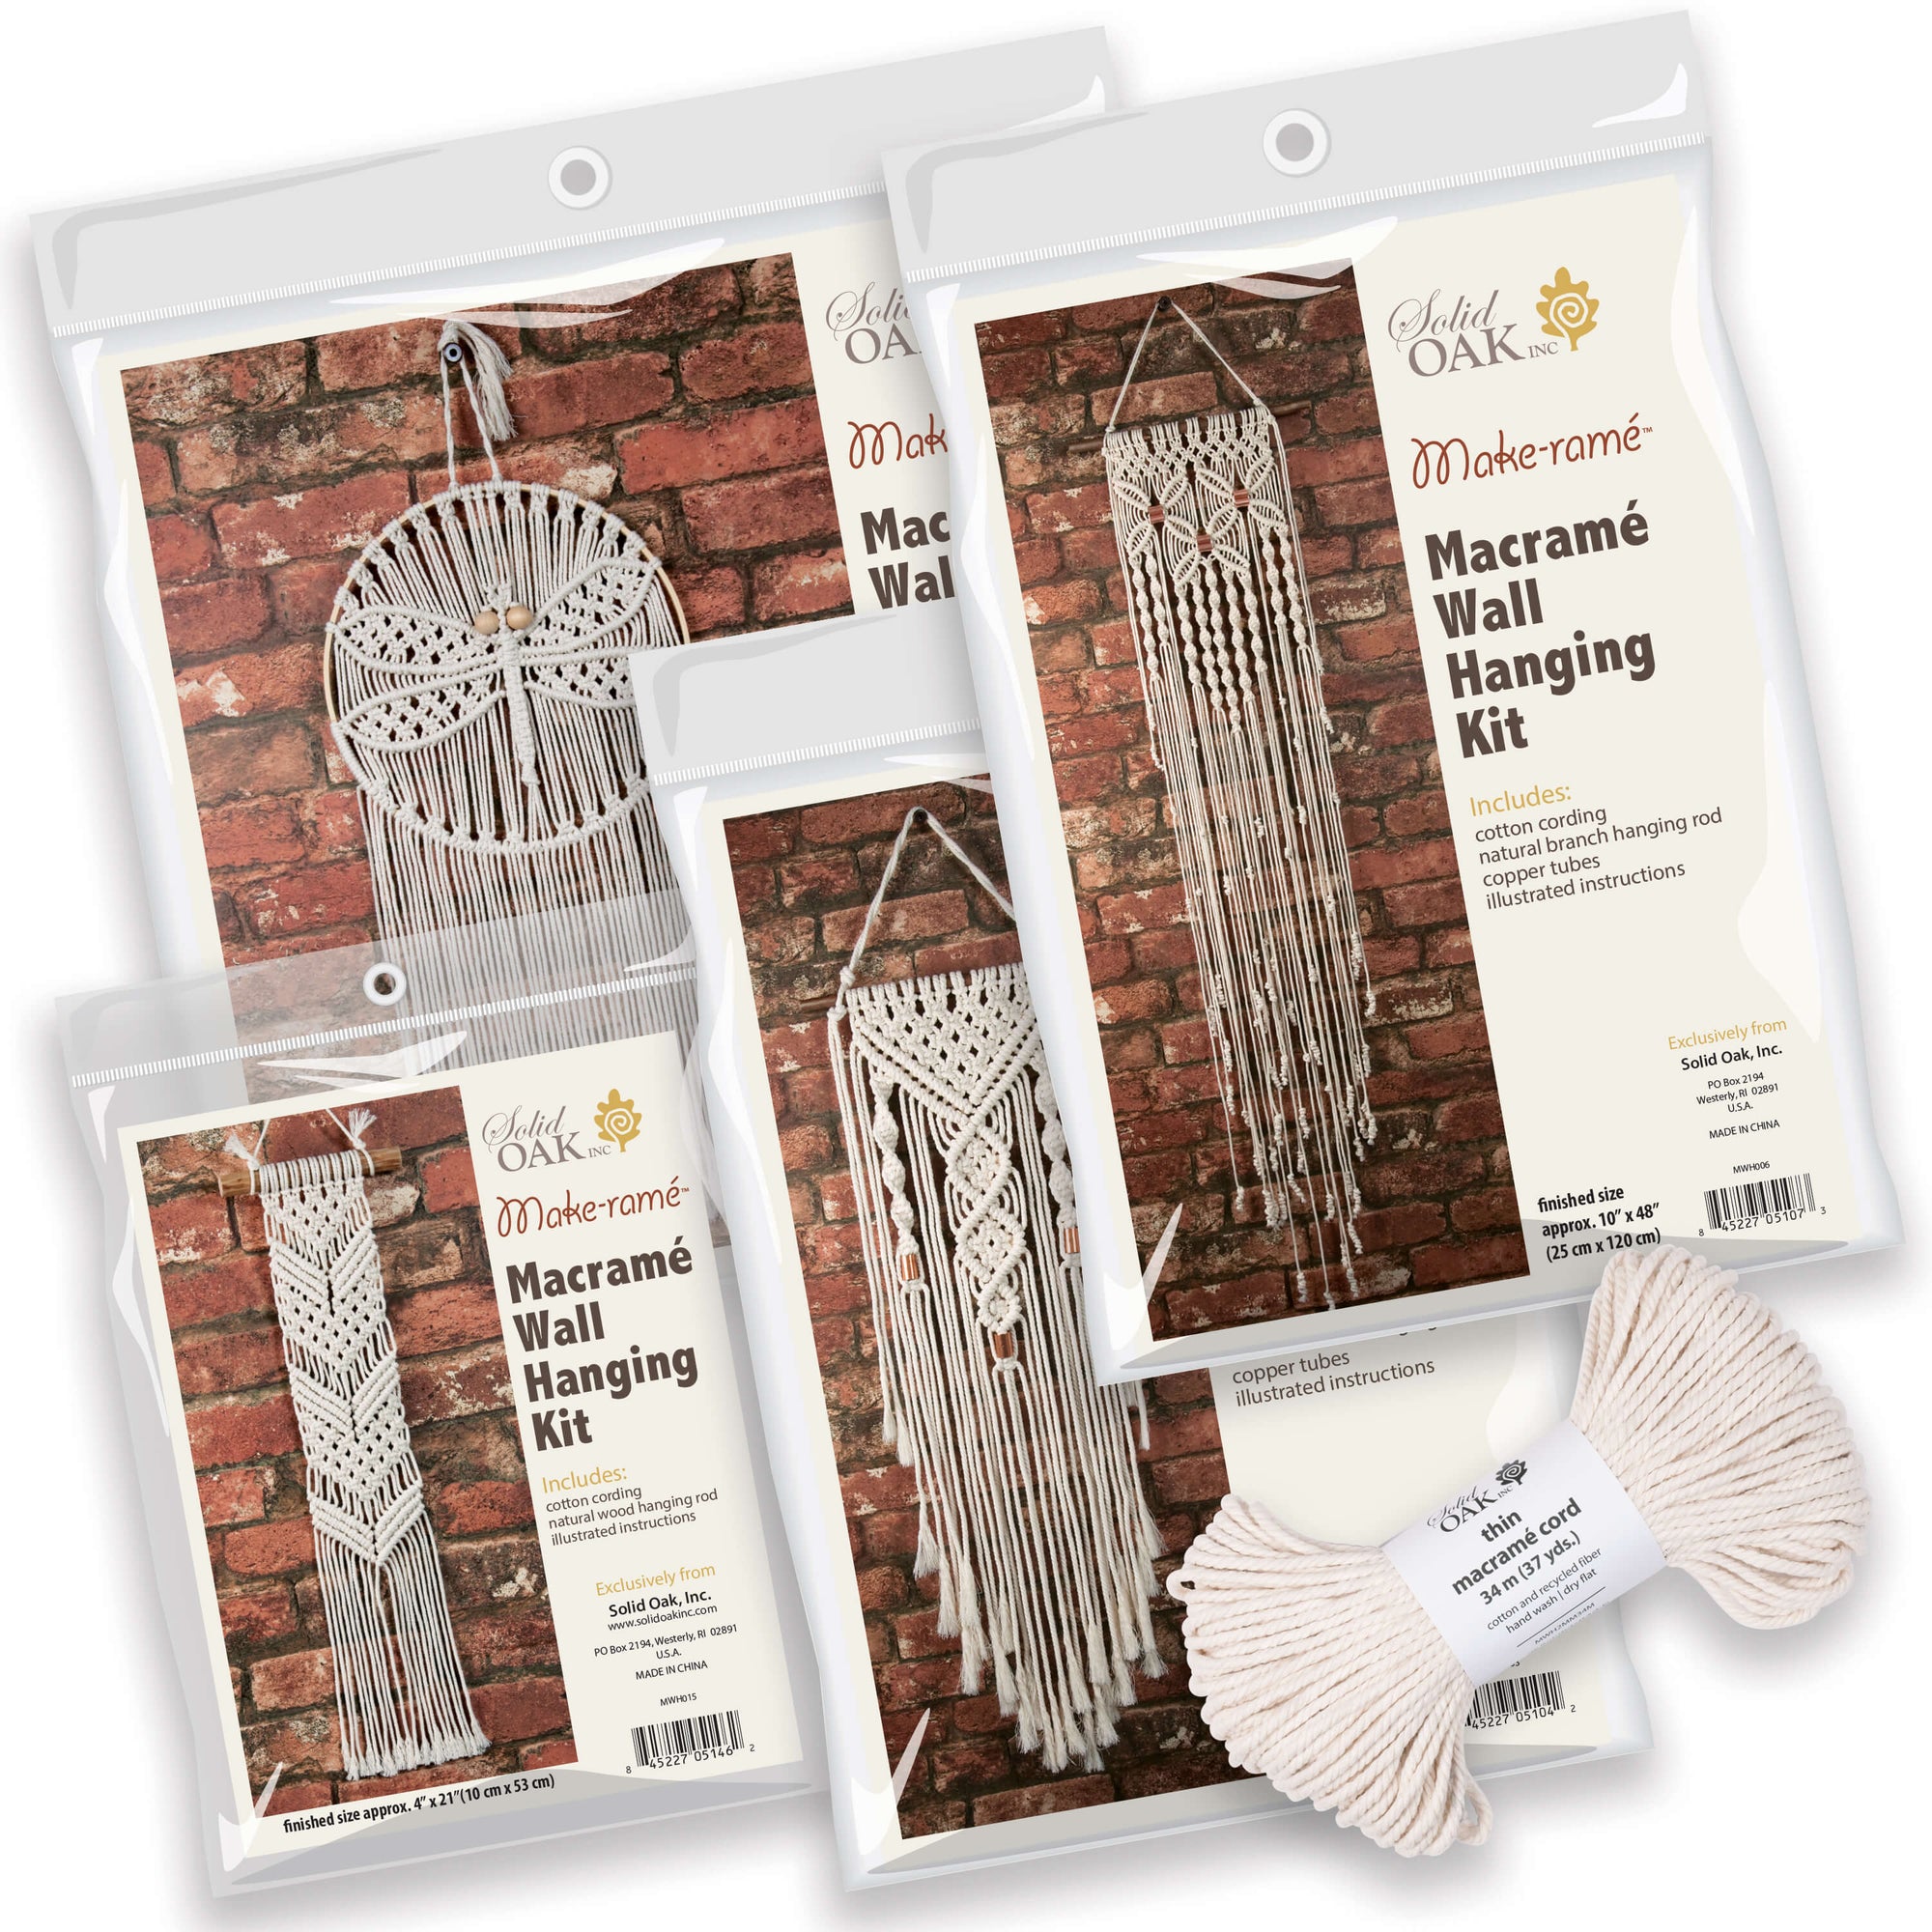 Solid Oak Macramé Wall Hanging Kits Review & Giveaway